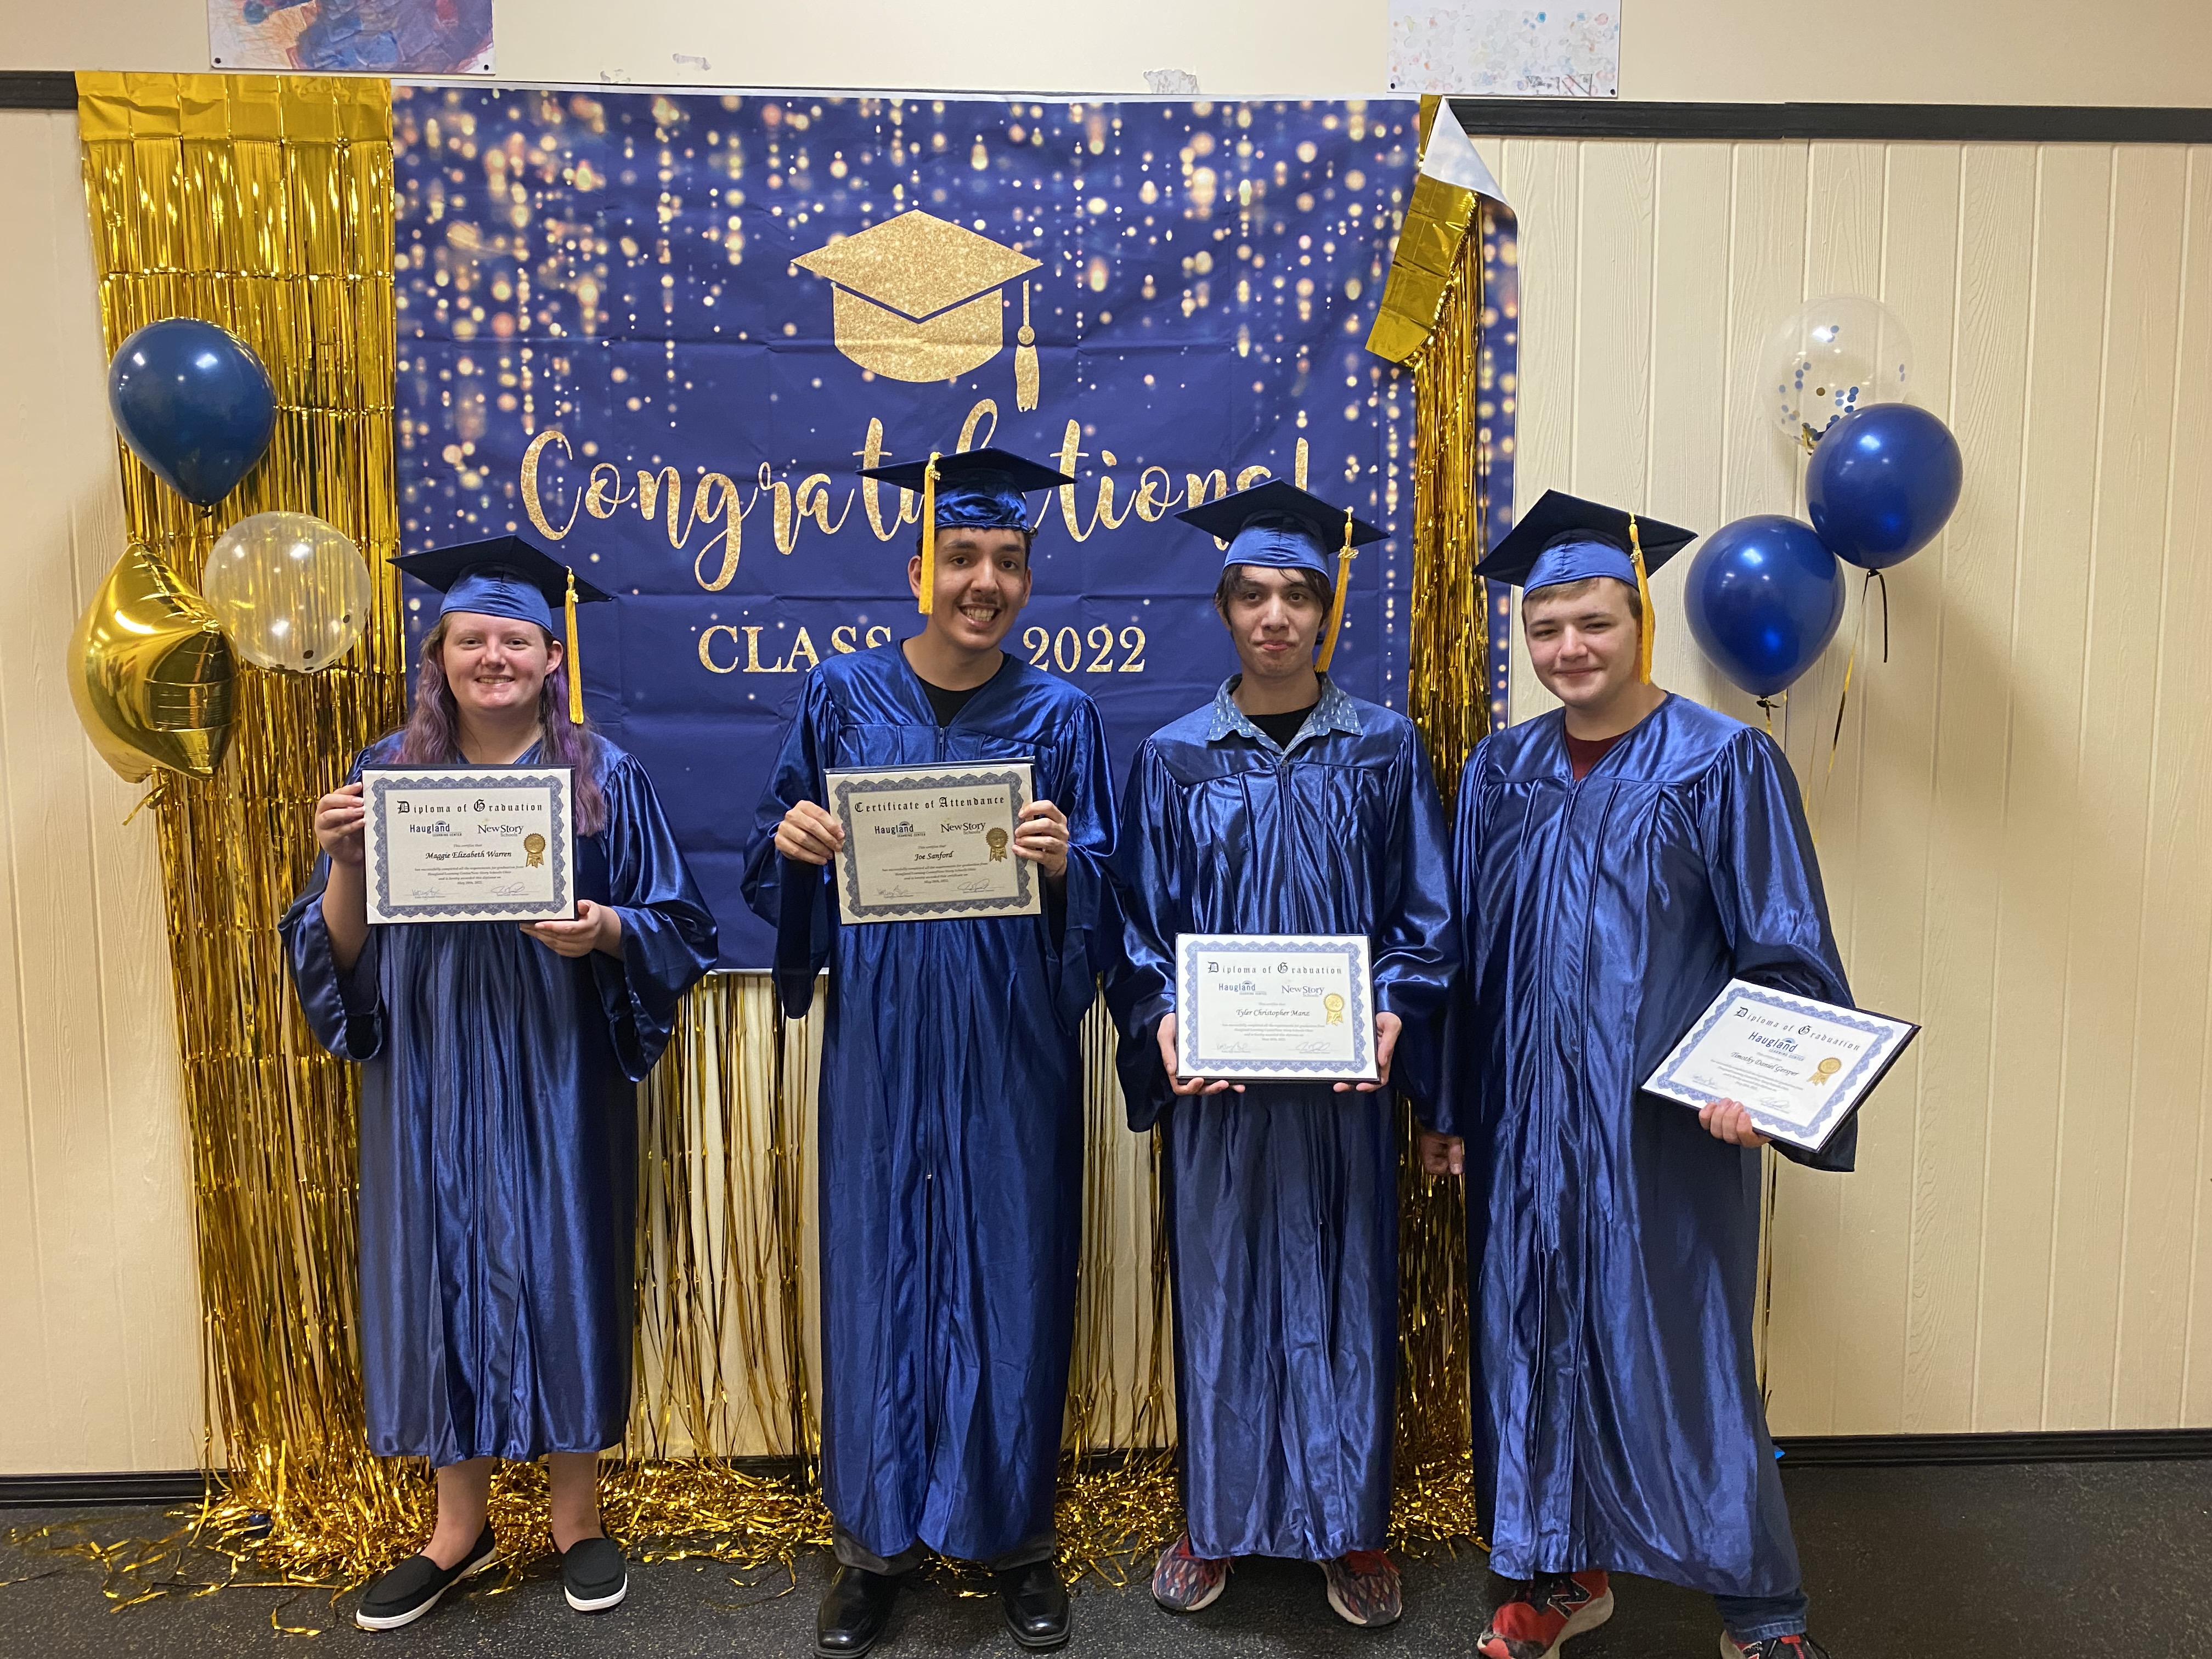 Graduates holding diplomas and certificates